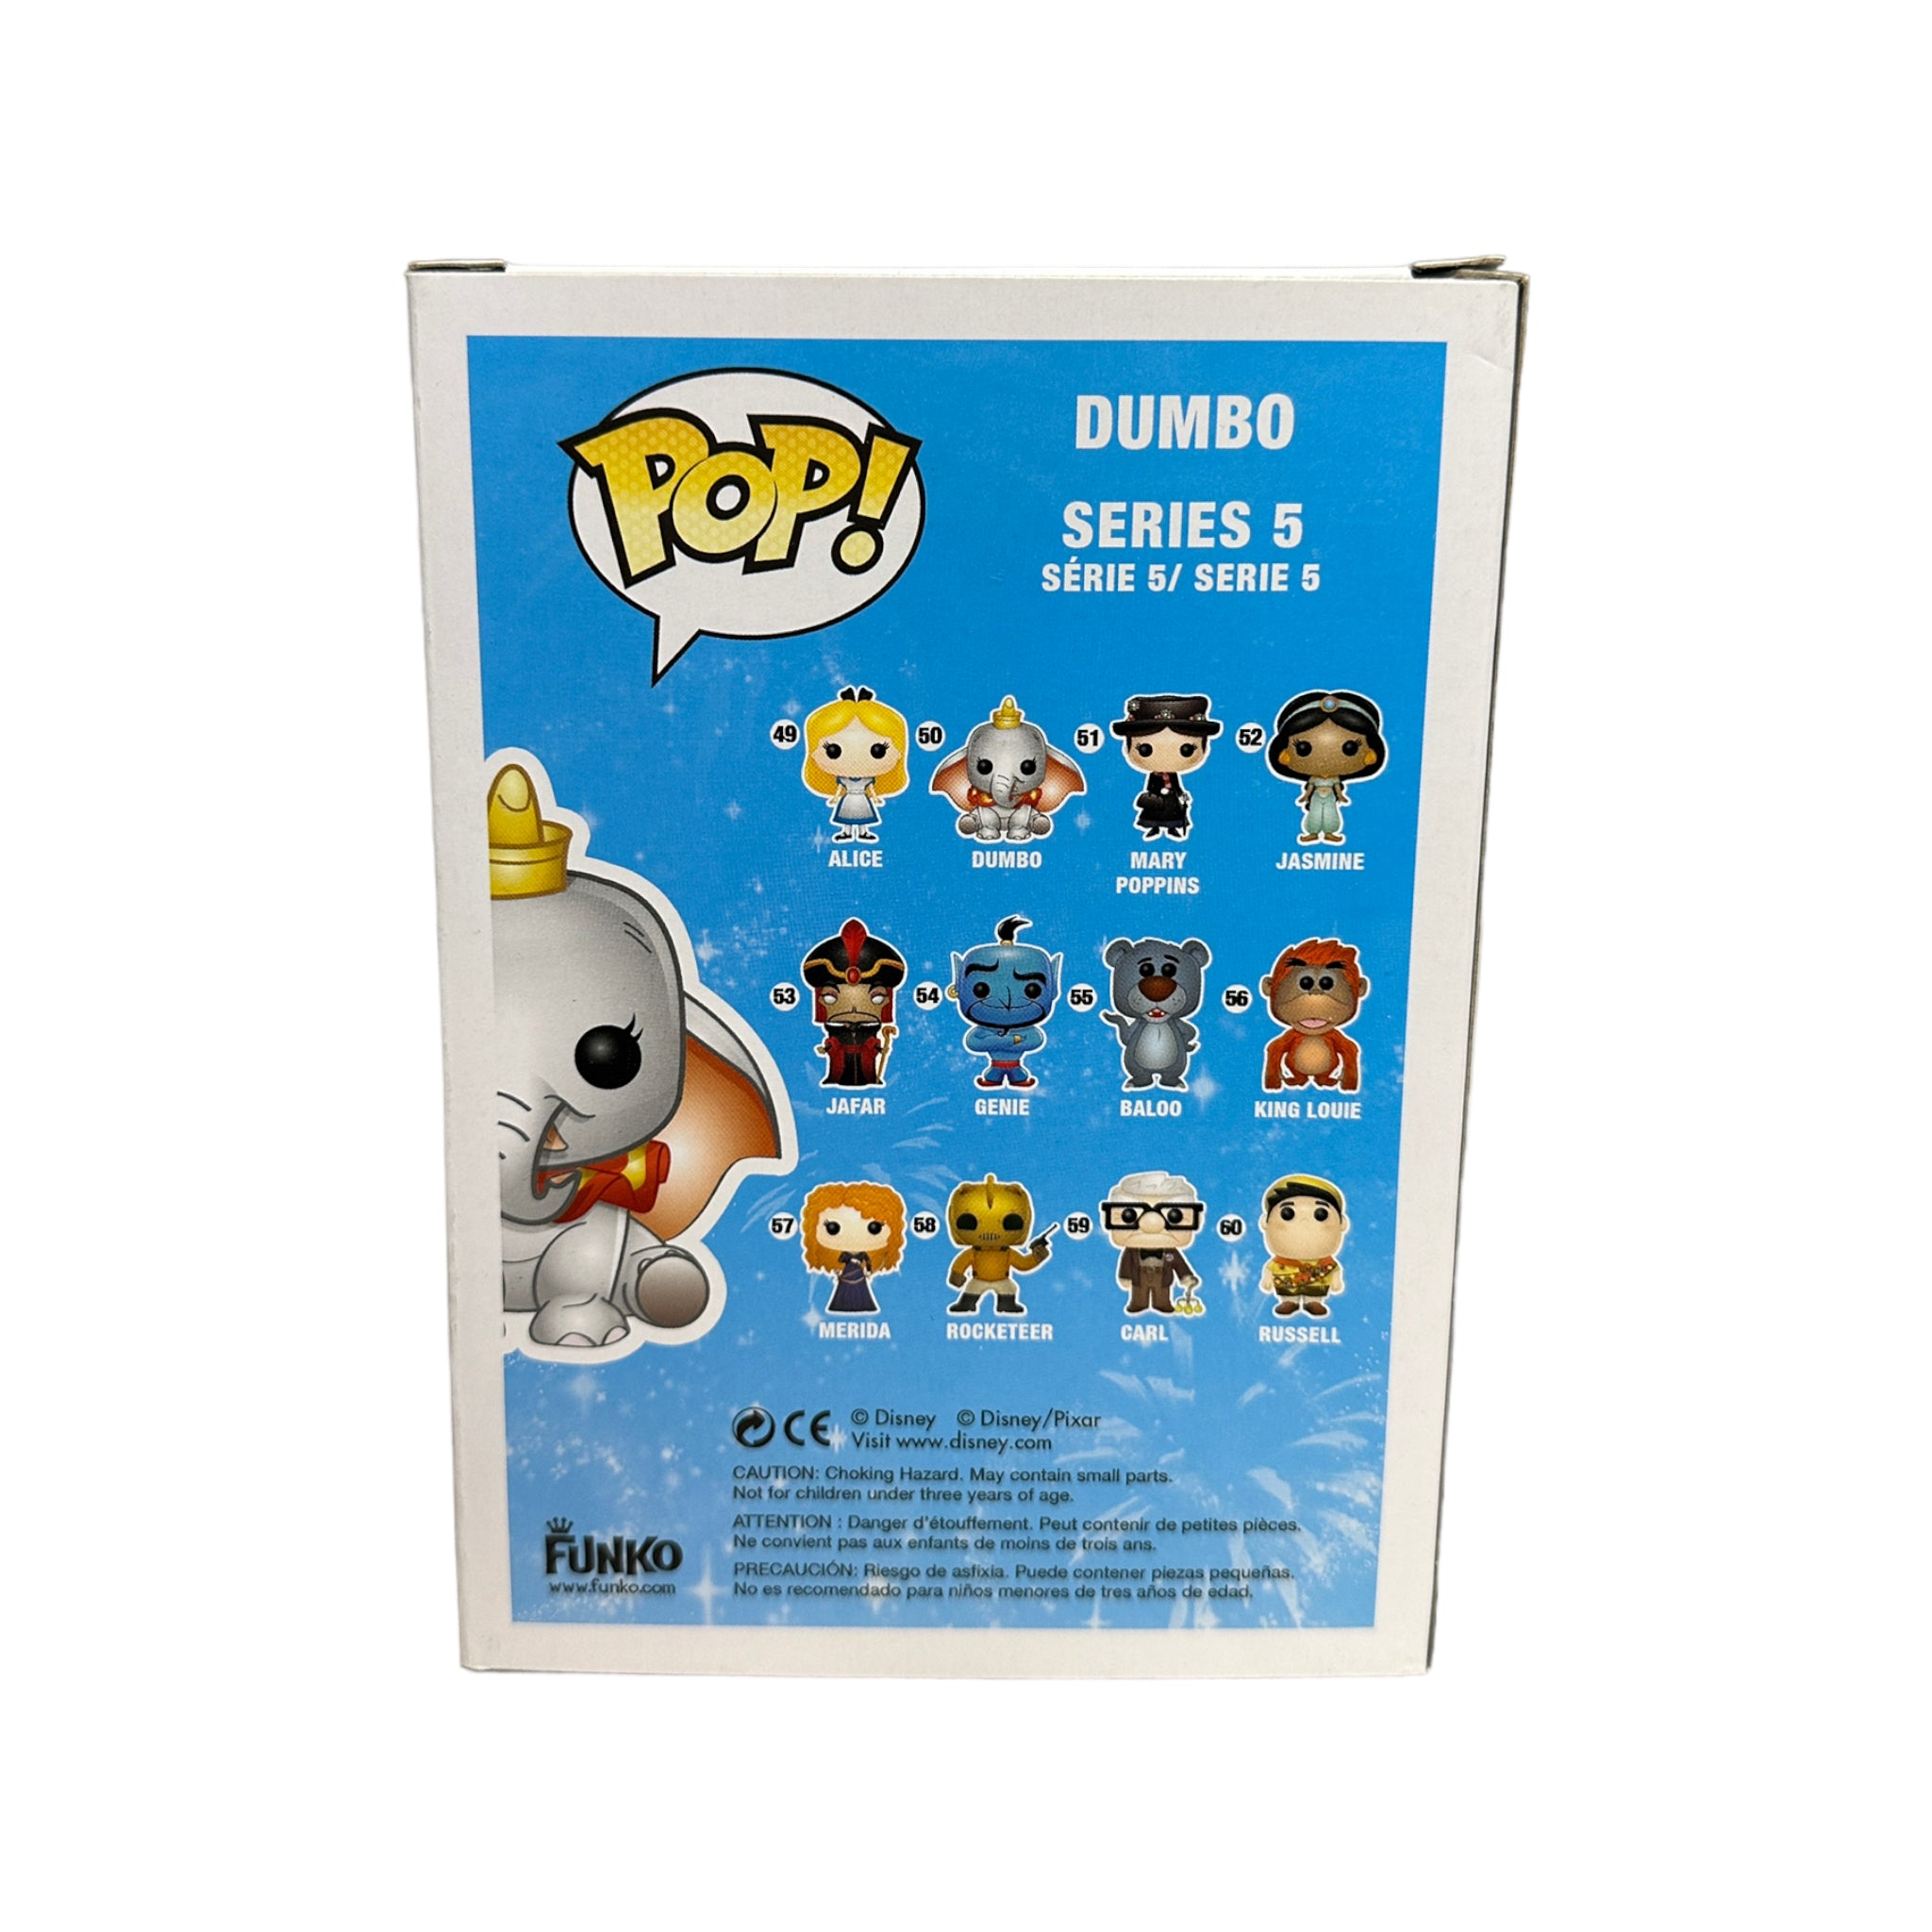 Dumbo #50 (Metallic) Funko Pop! - Disney Series 5 - SDCC 2013 Exclusive LE480 Pcs - Condition 8.75/10